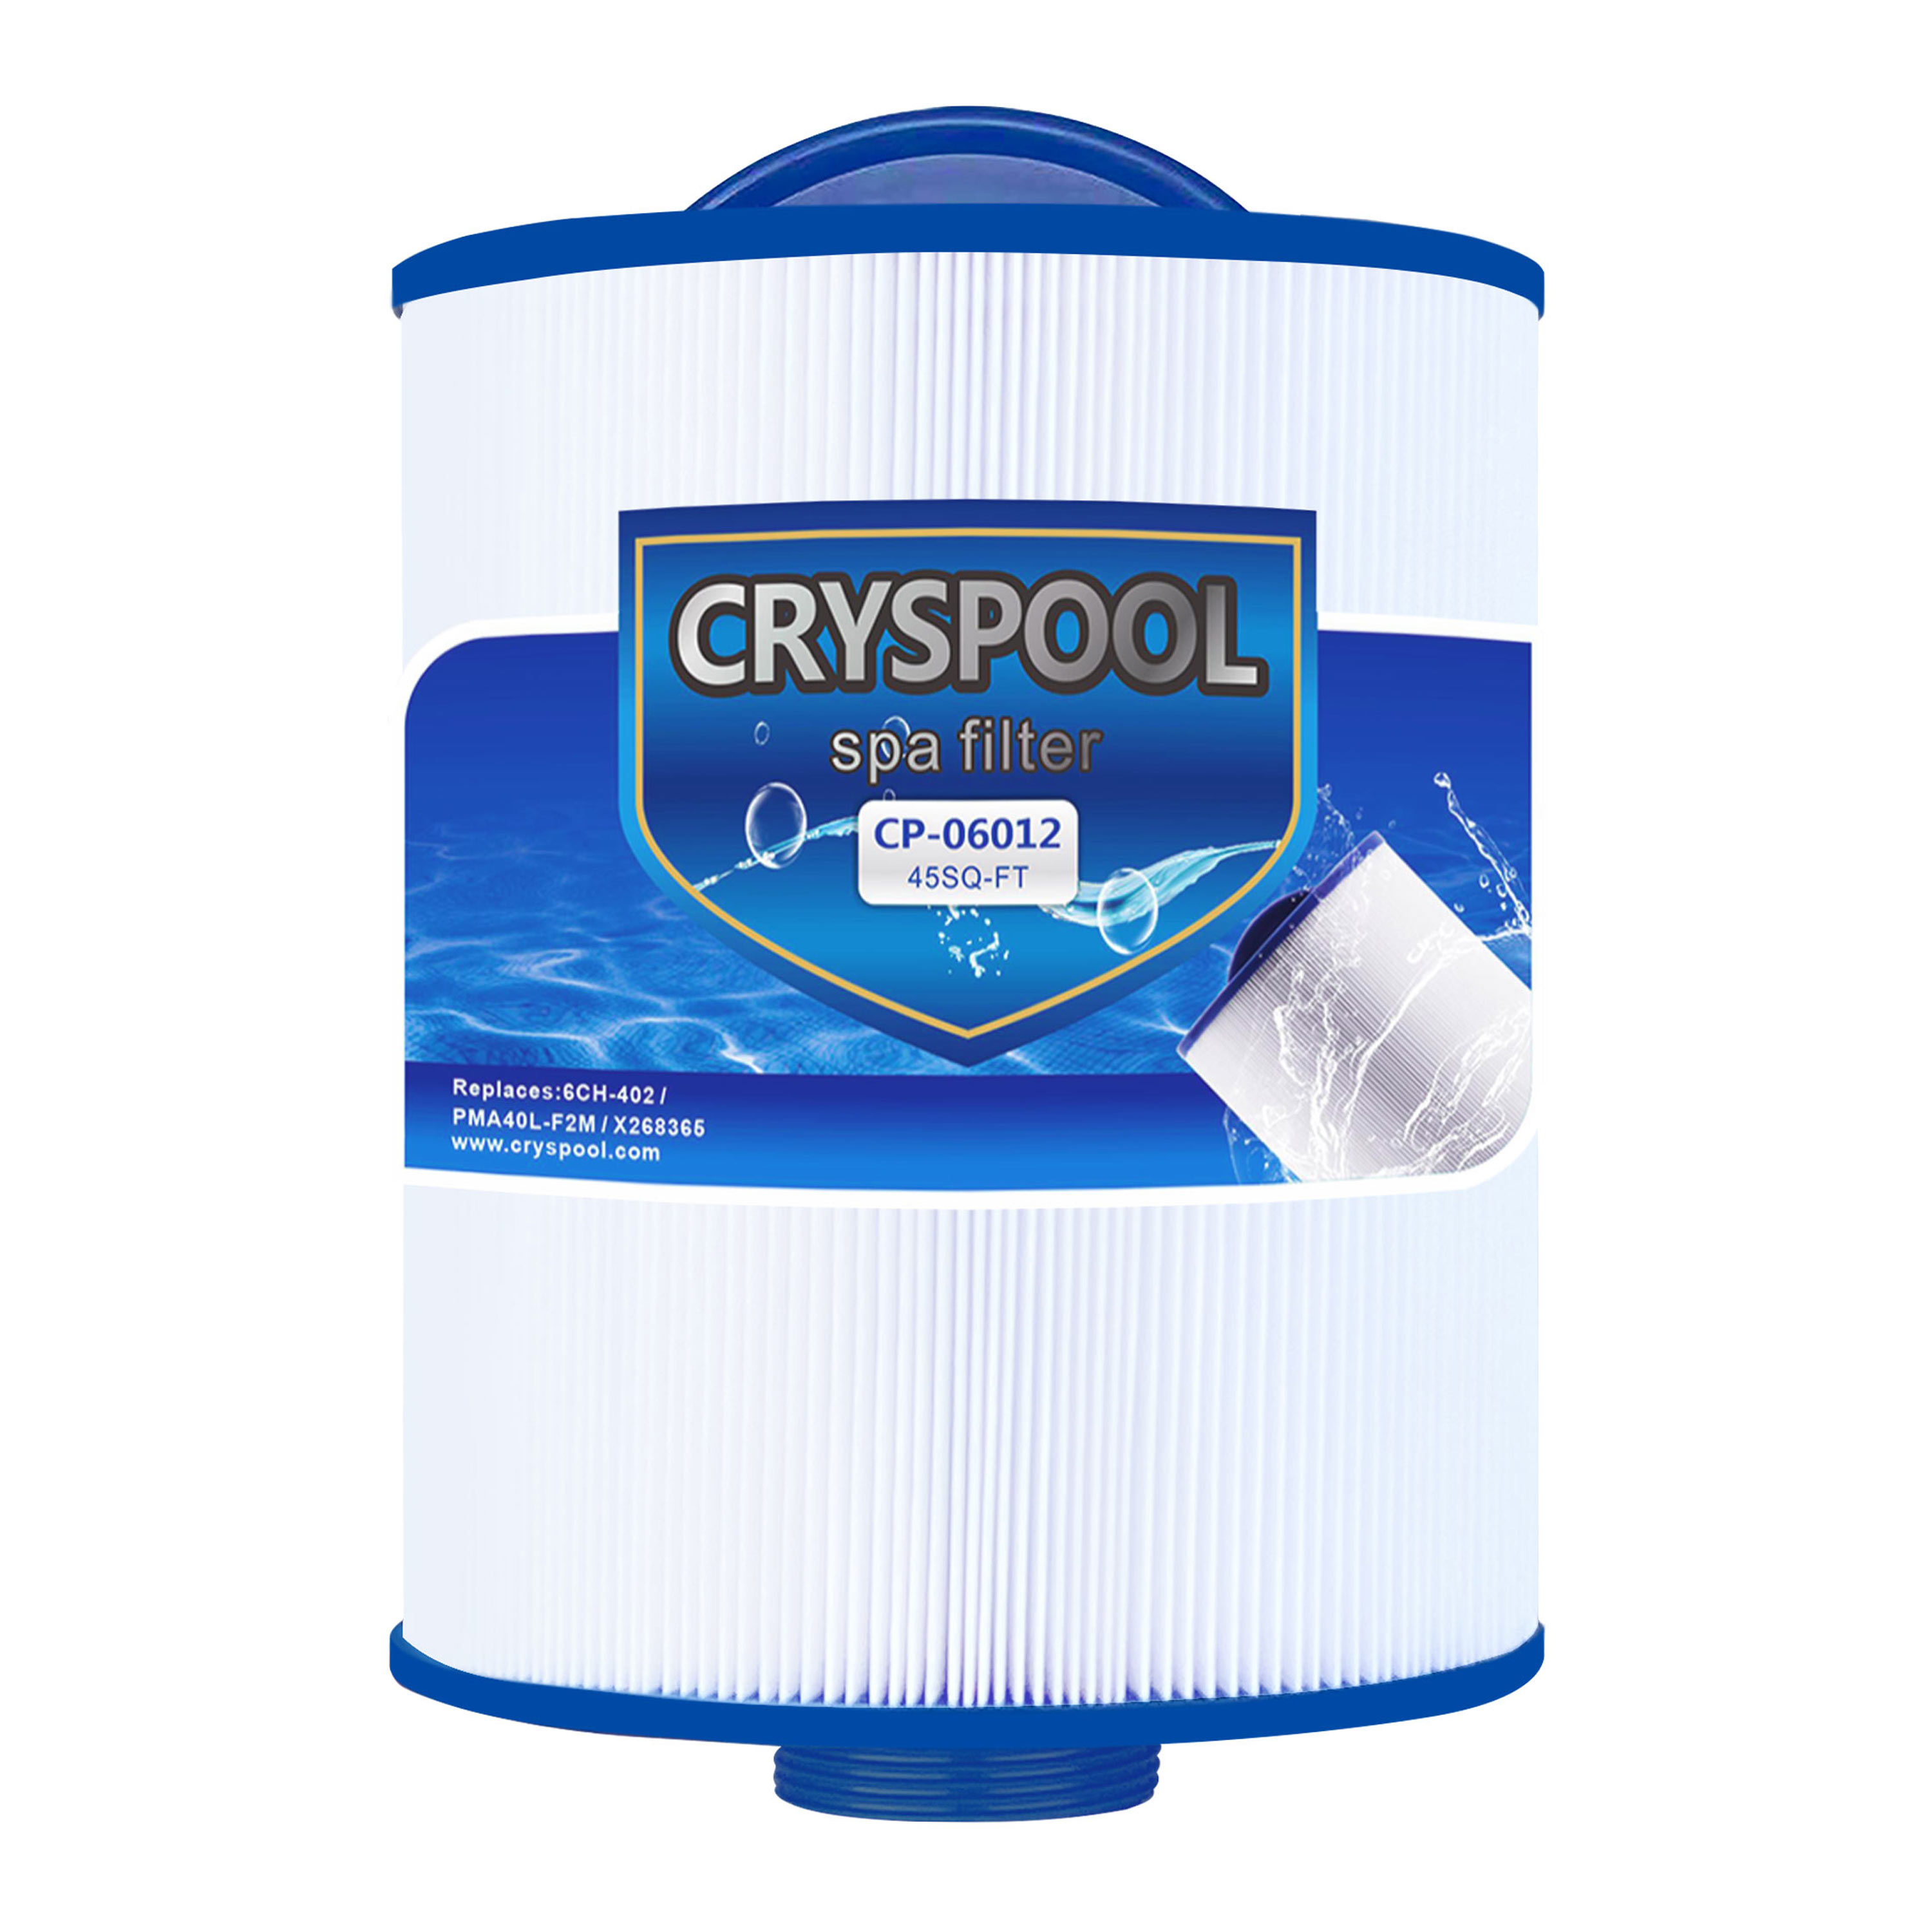 2021 Good Quality Hot Tub Water Purifier - Cryspool PMA40L Spa Filter Compatible with Unicel 6CH-402,PMA40L-F2M,X268543,Master Spas Twilight X268365,X26851,X268514, 40 sq.ft – Cryspool